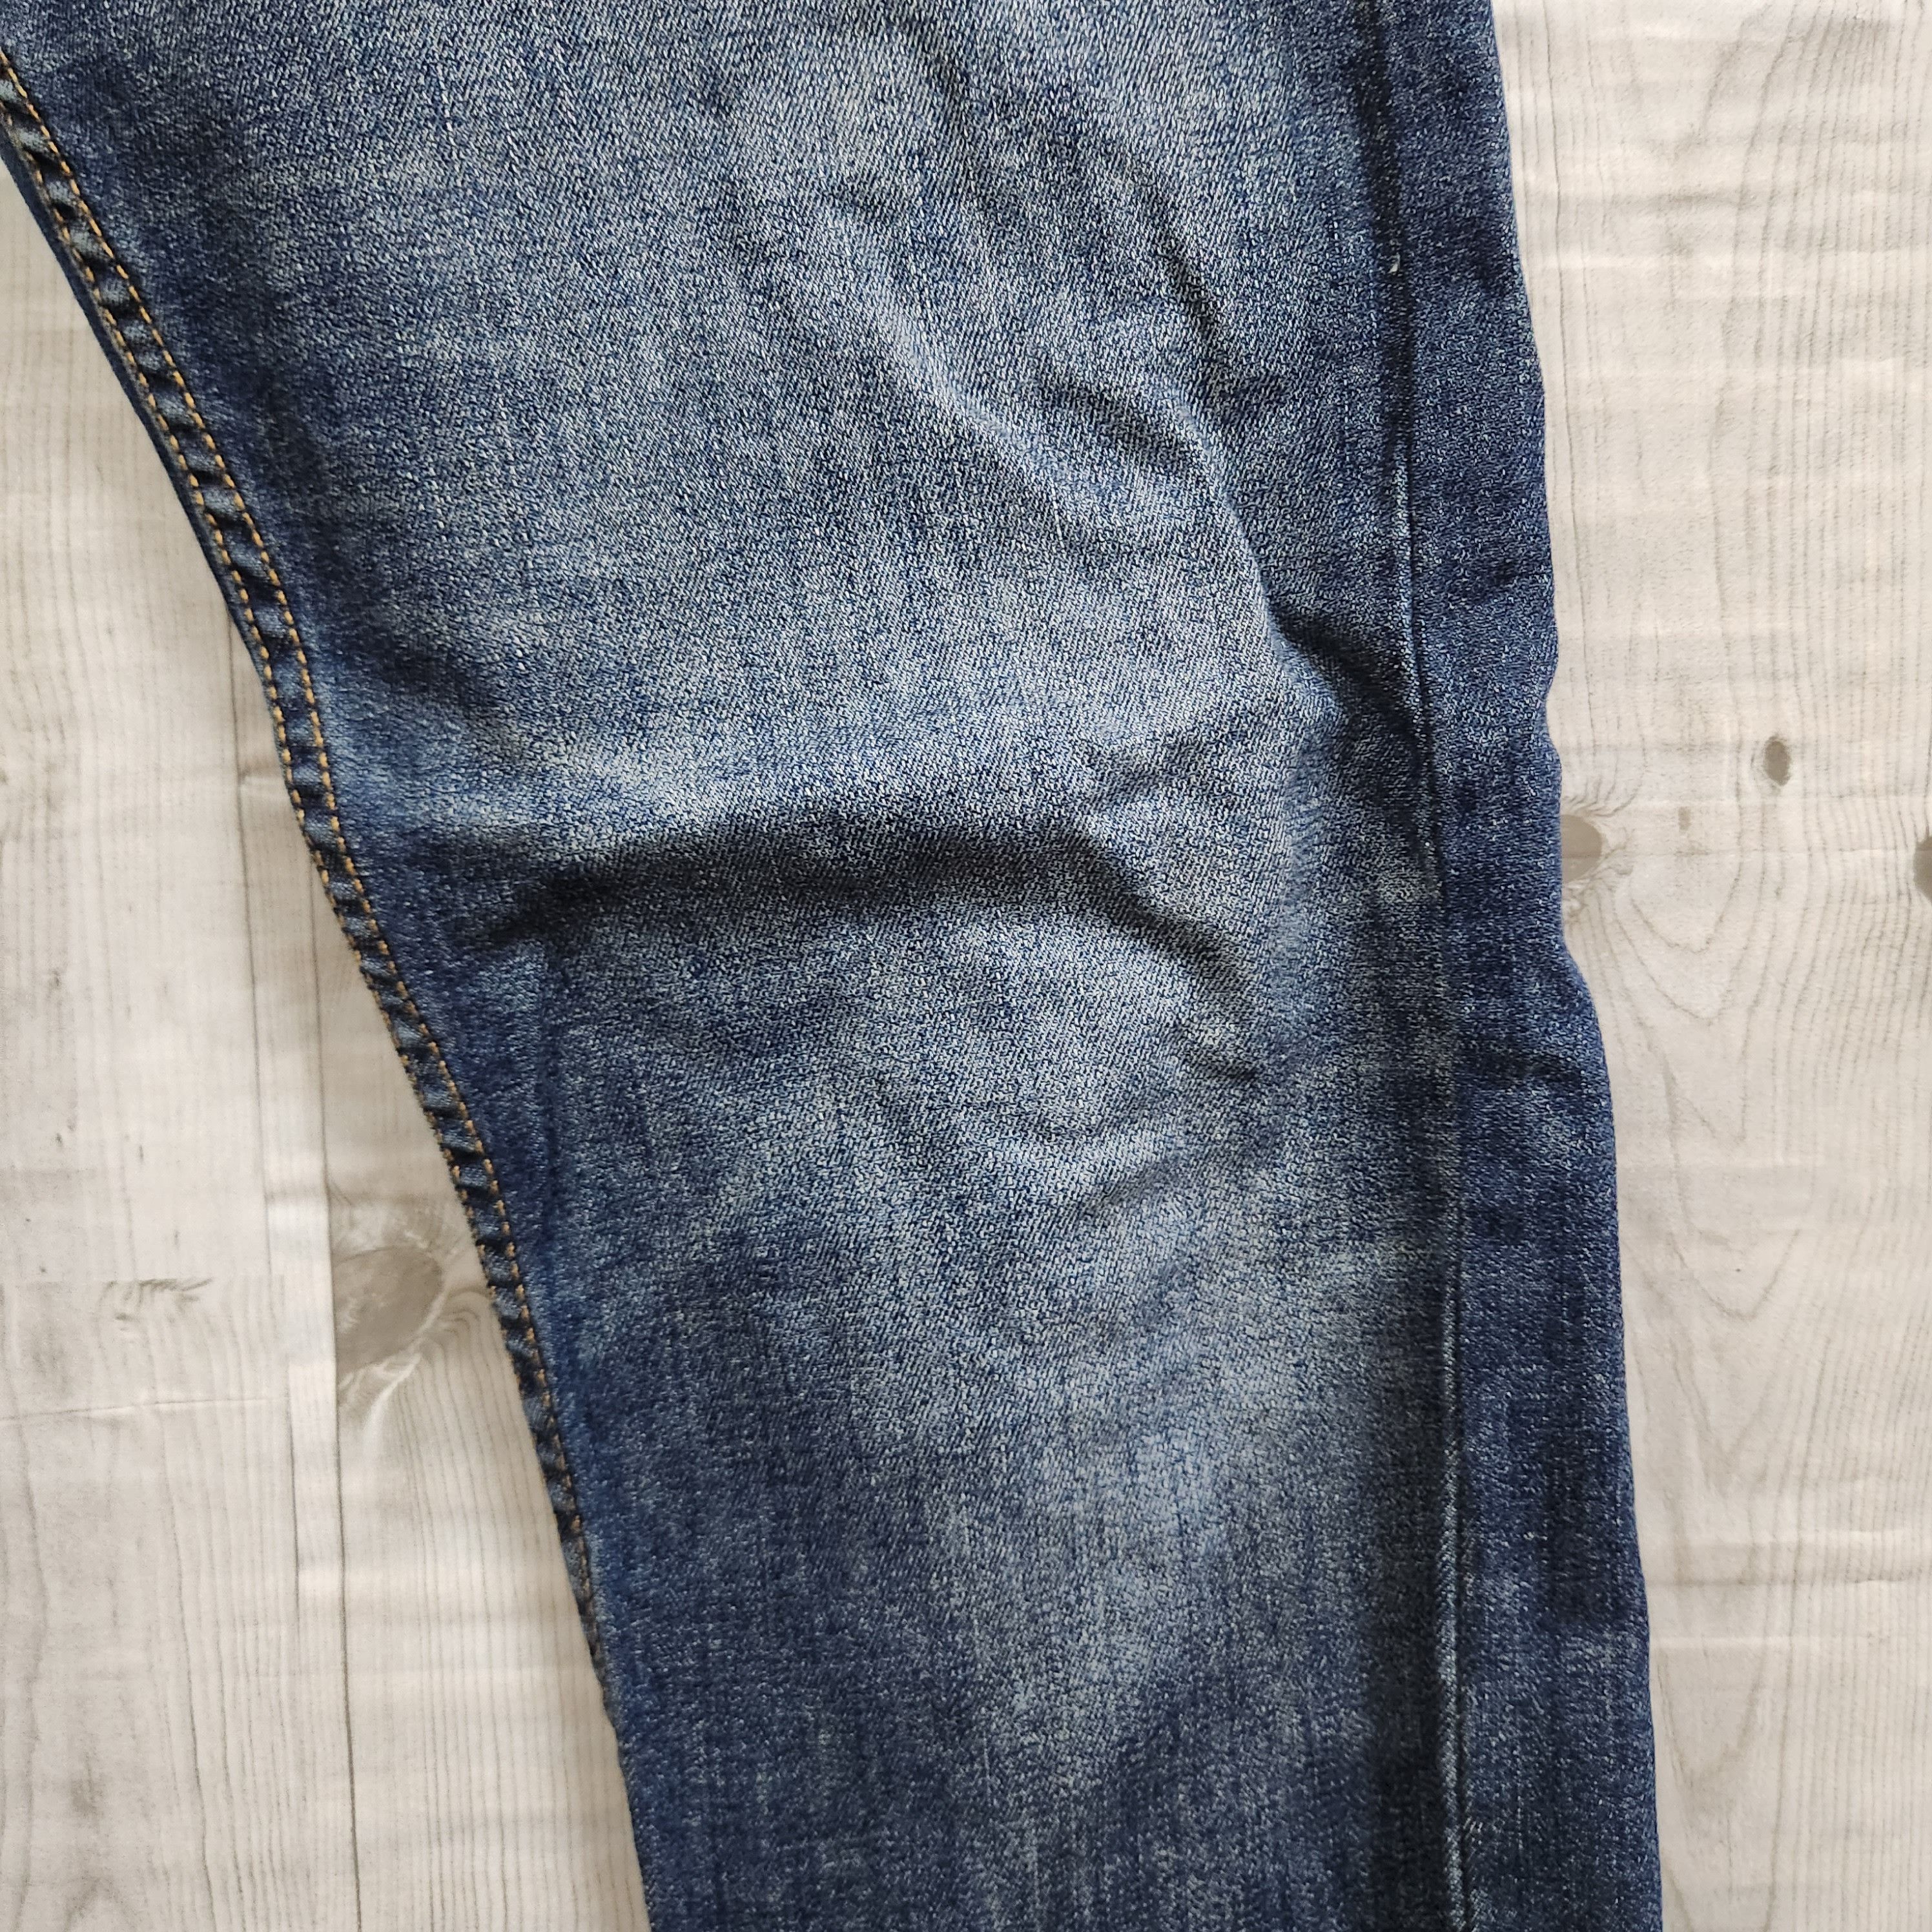 Levi's 510 Blue Denim Jeans - 16